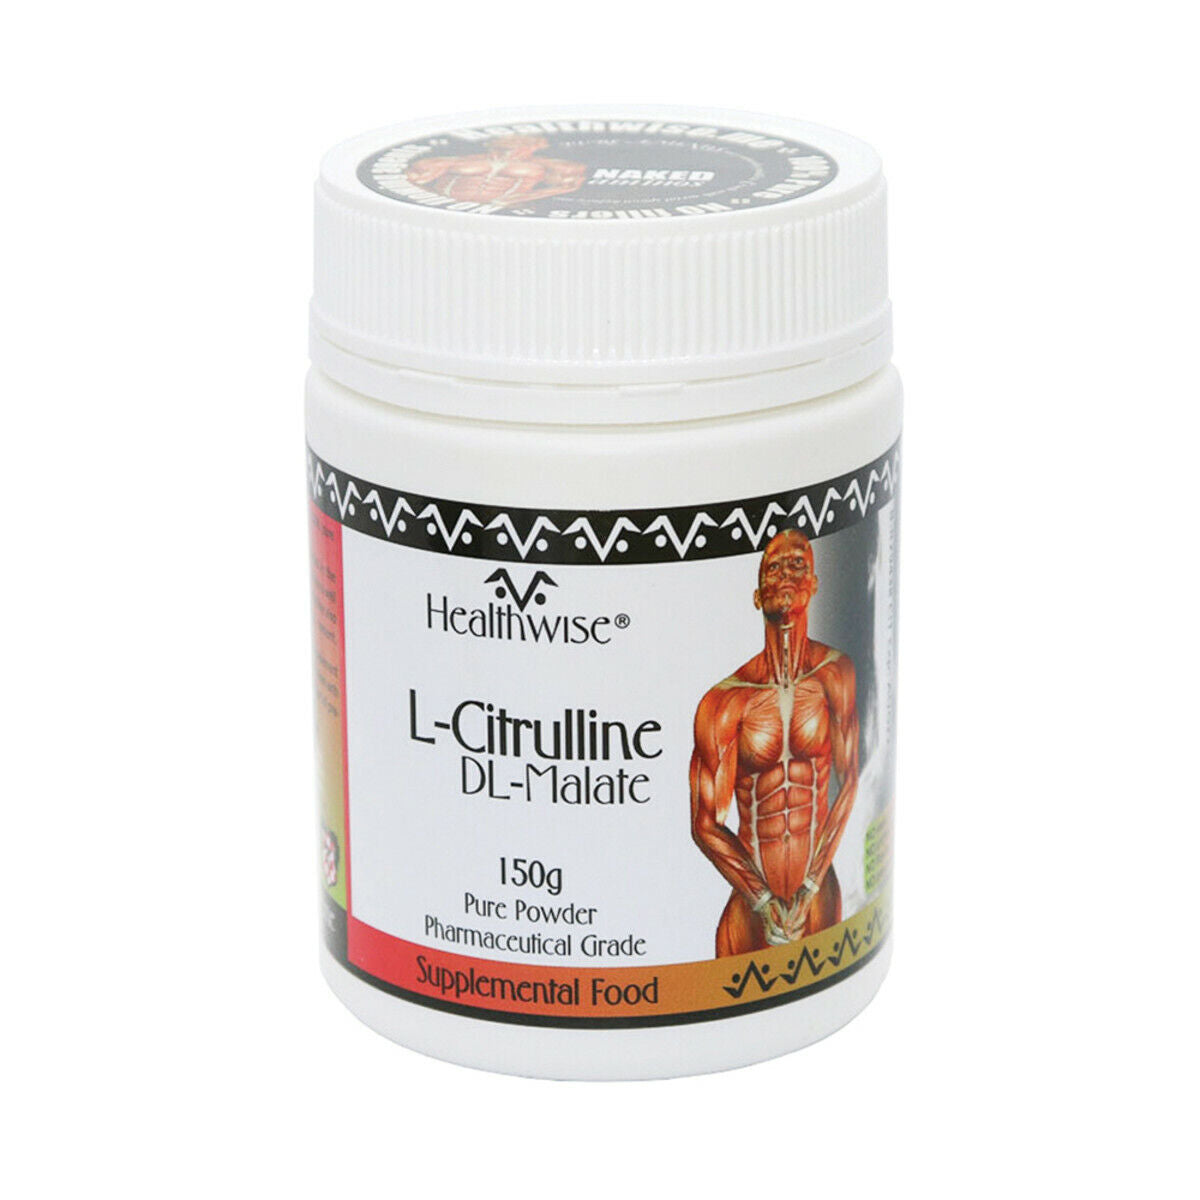 Healthwise L-Citrulline DL-Malate 150g